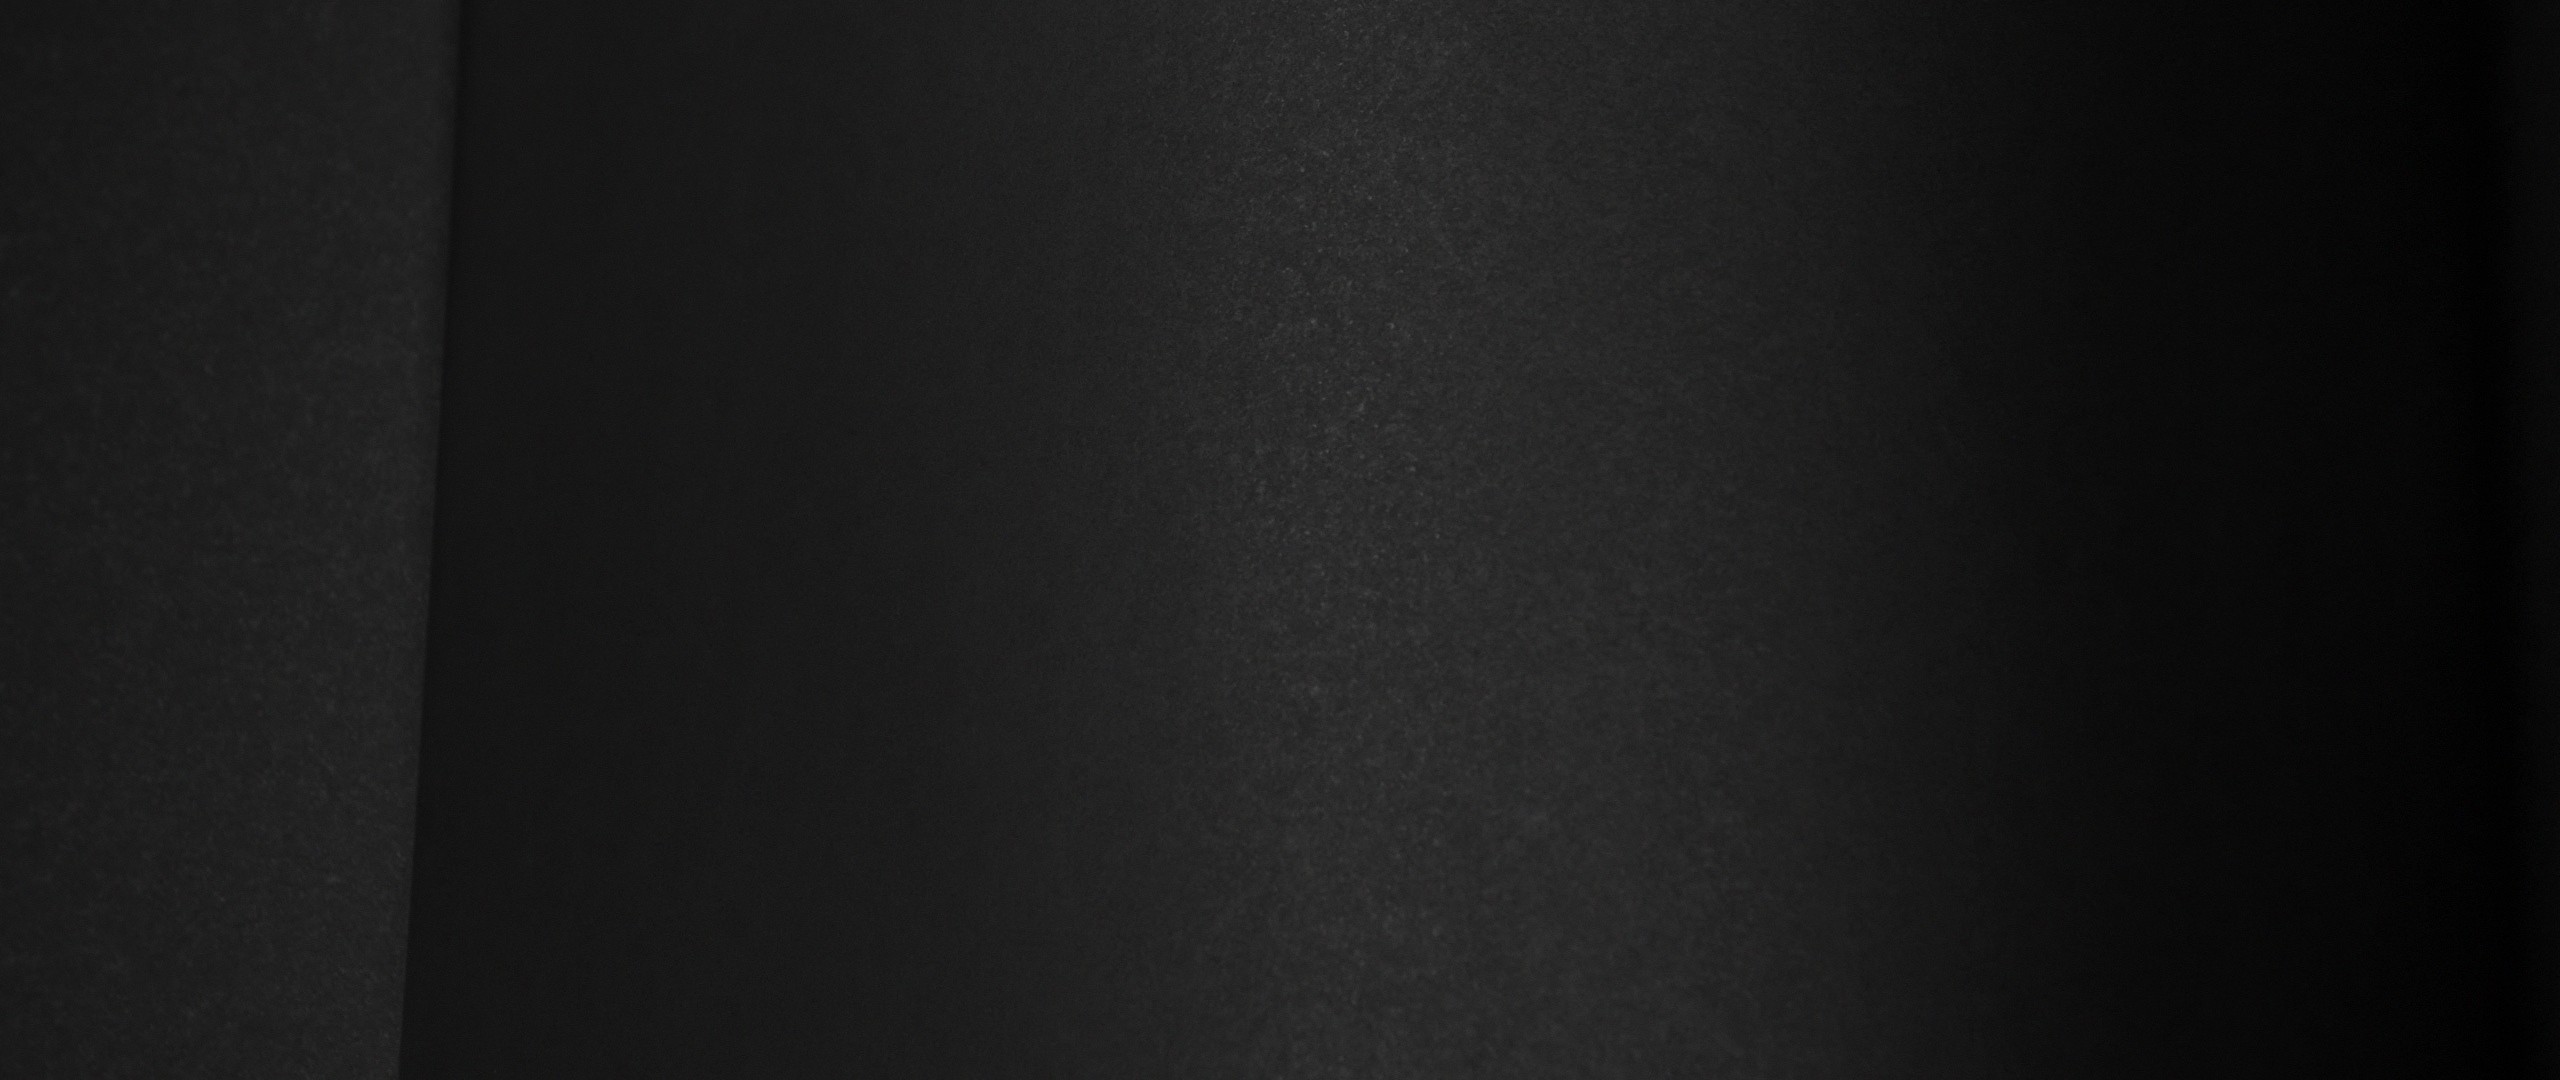 2560x1080  Wallpaper wall corner, black, texture, background